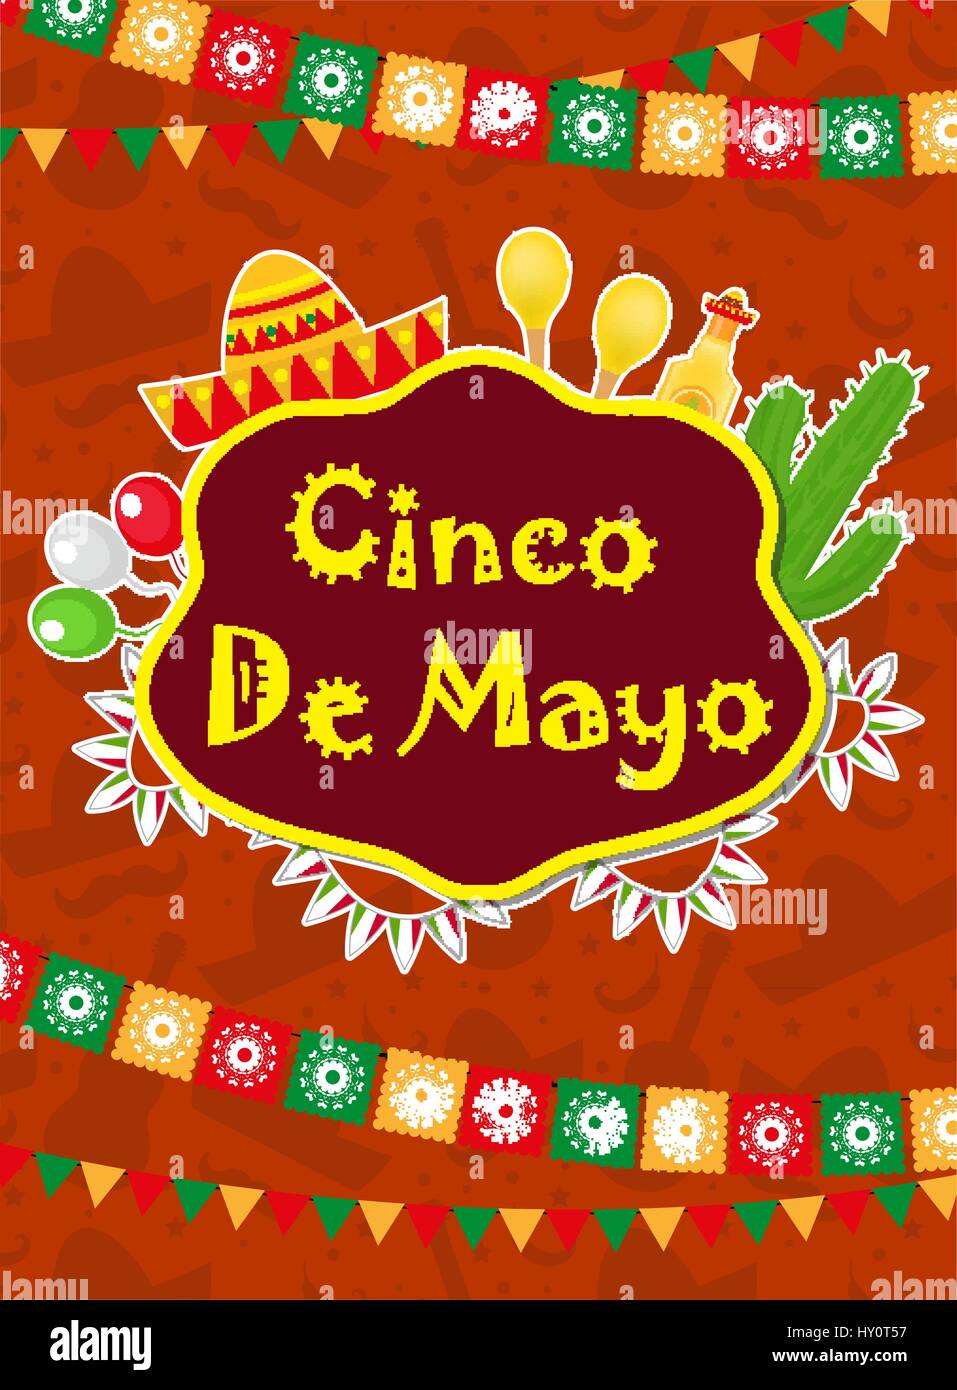 Del Sol Motifs Red Cinco de Mayo Fiesta Mexican Theme Party Deluxe Invitations 